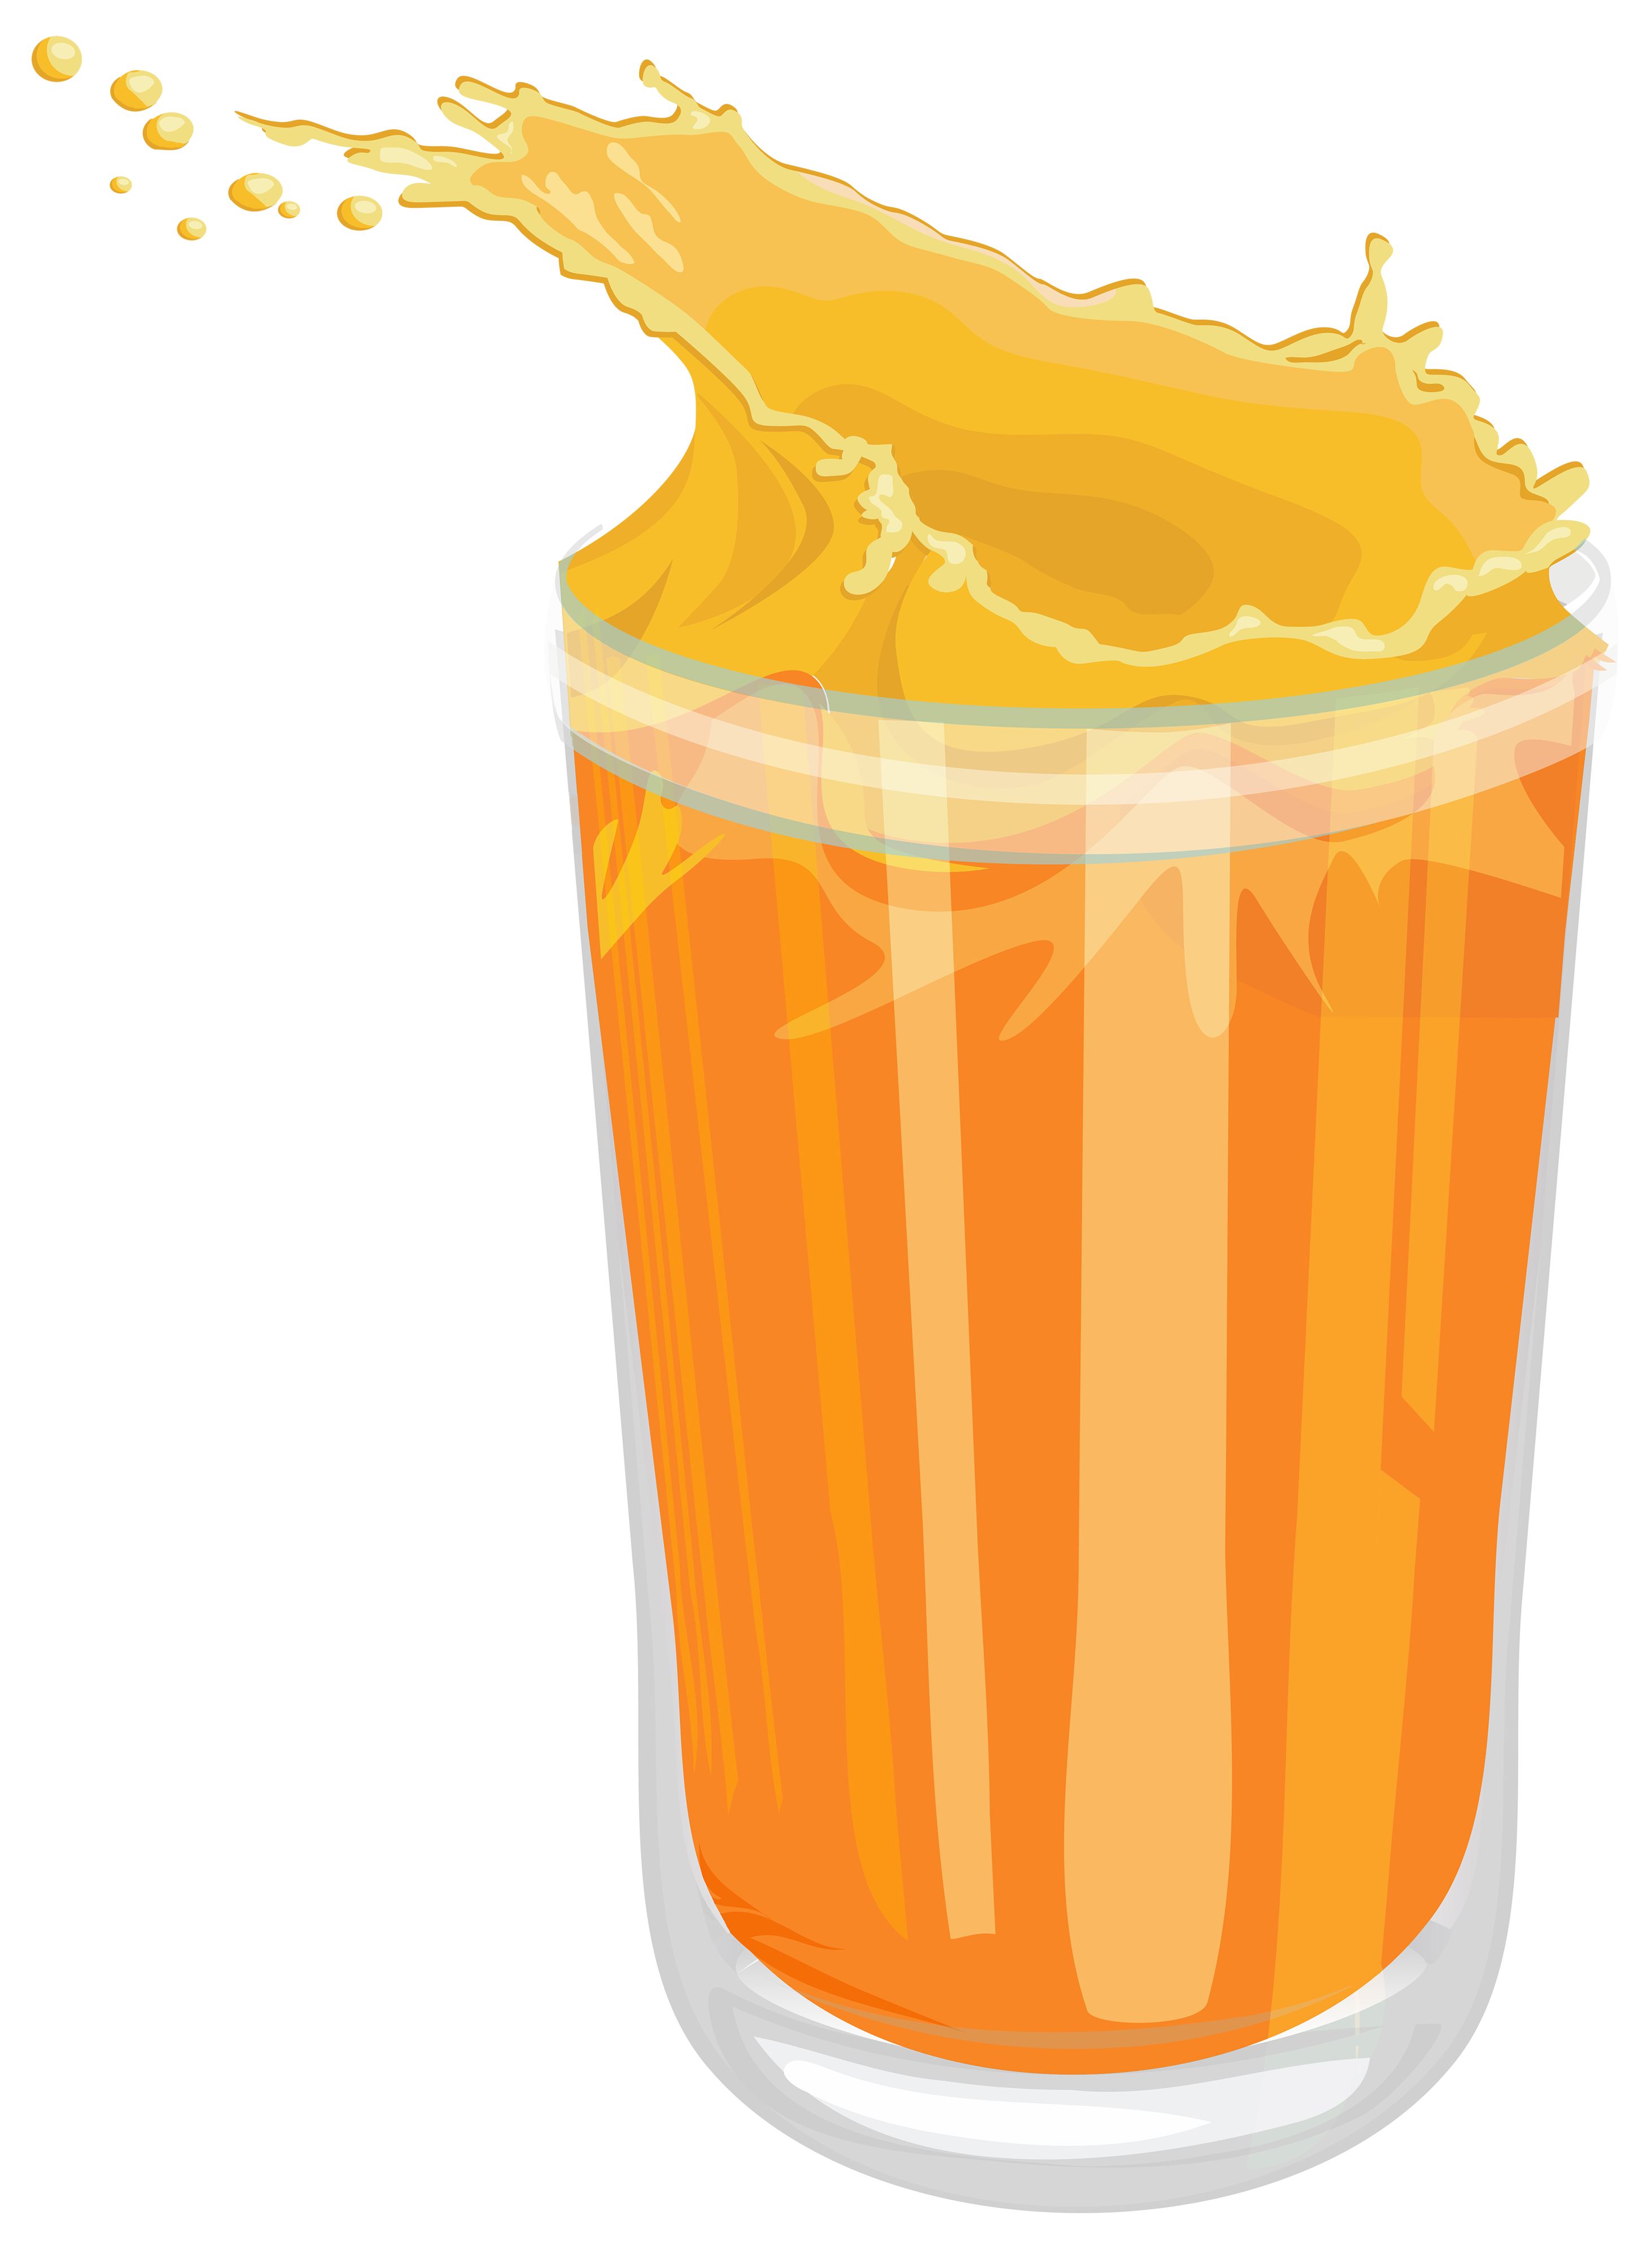 Free Orange Juice Clipart Download Free Clip Art Free Clip Art On Clipart Library